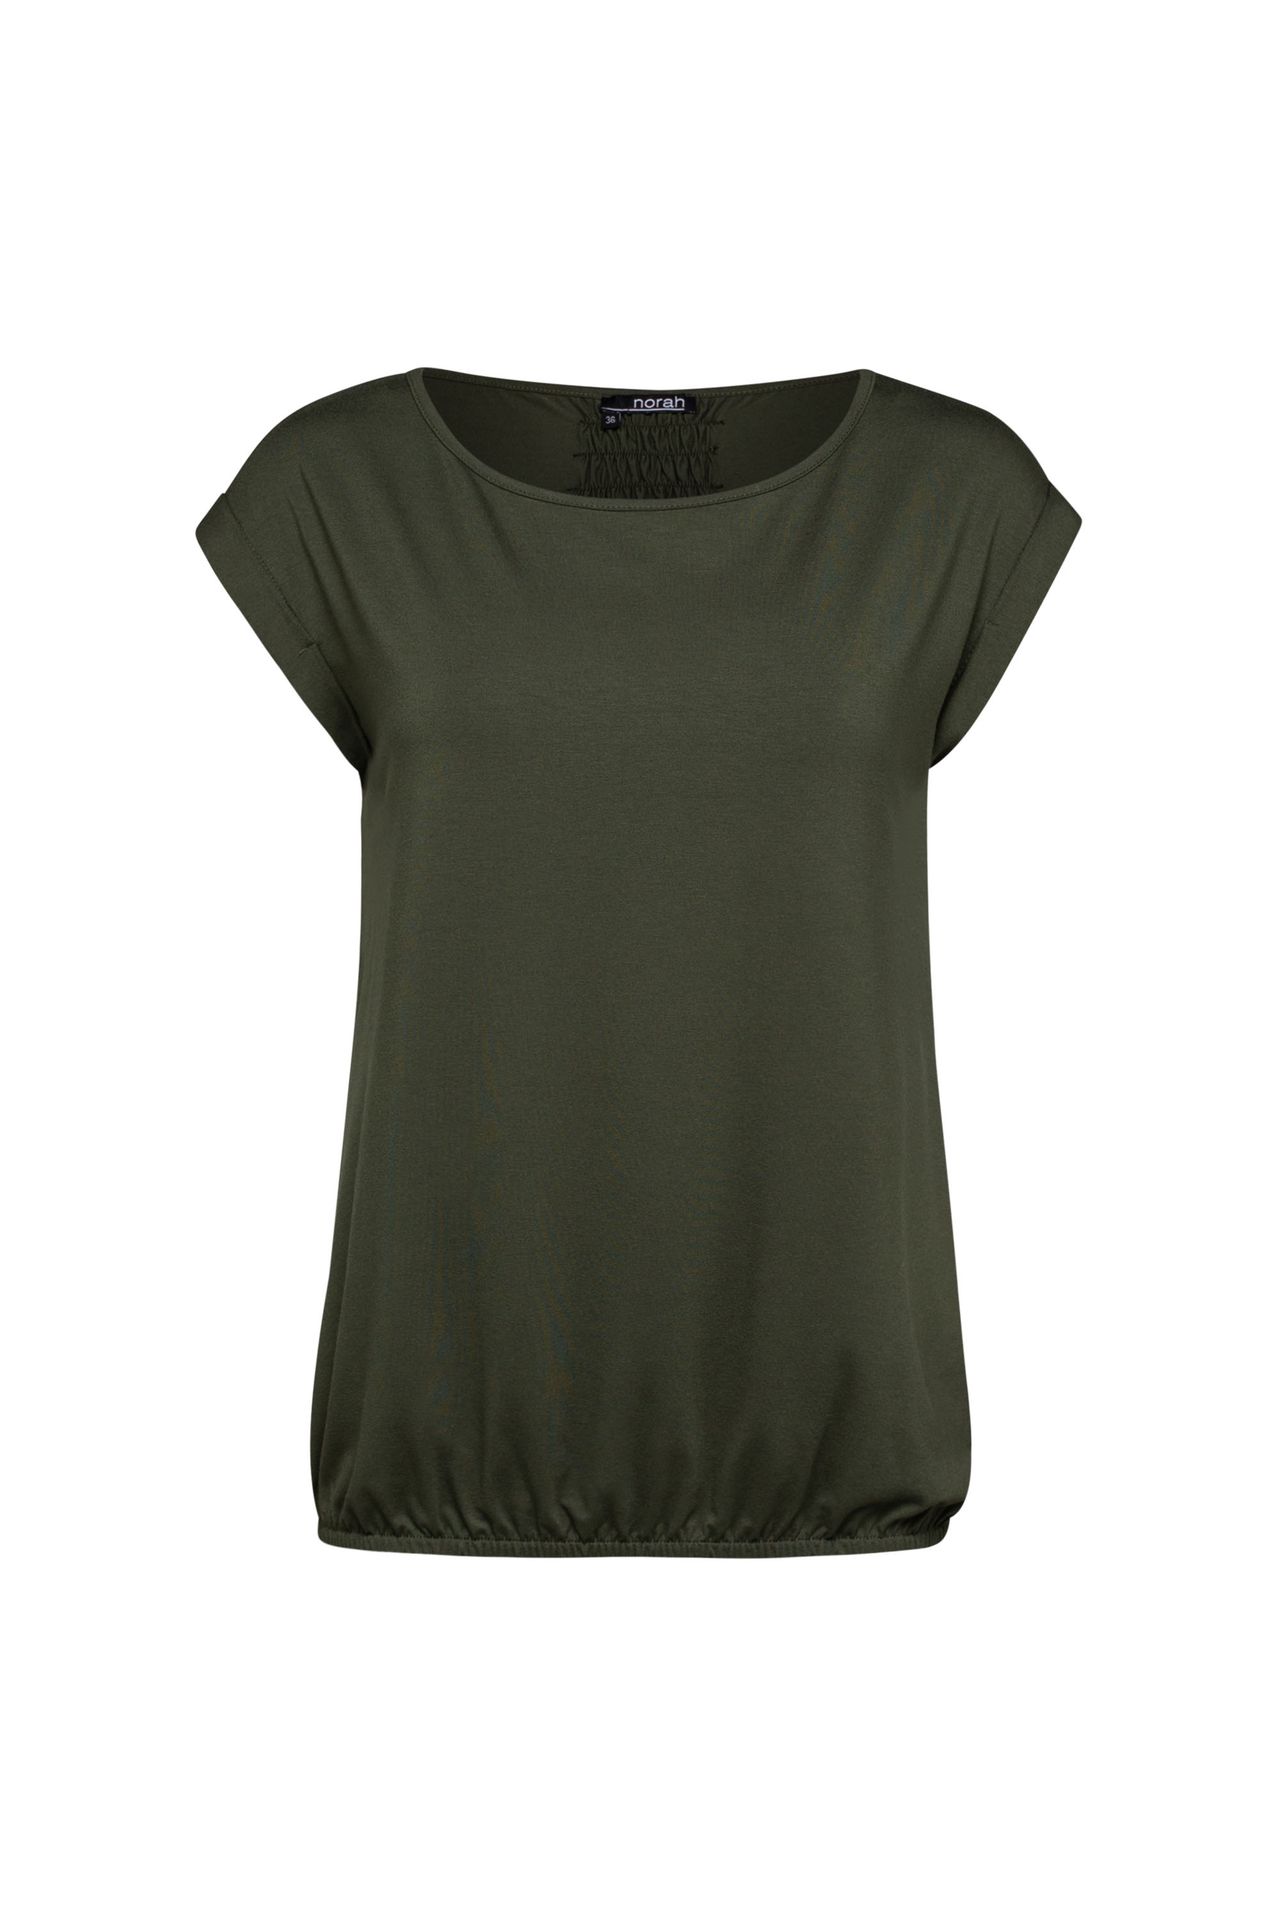 Norah Shirt groen dark army 203656-580